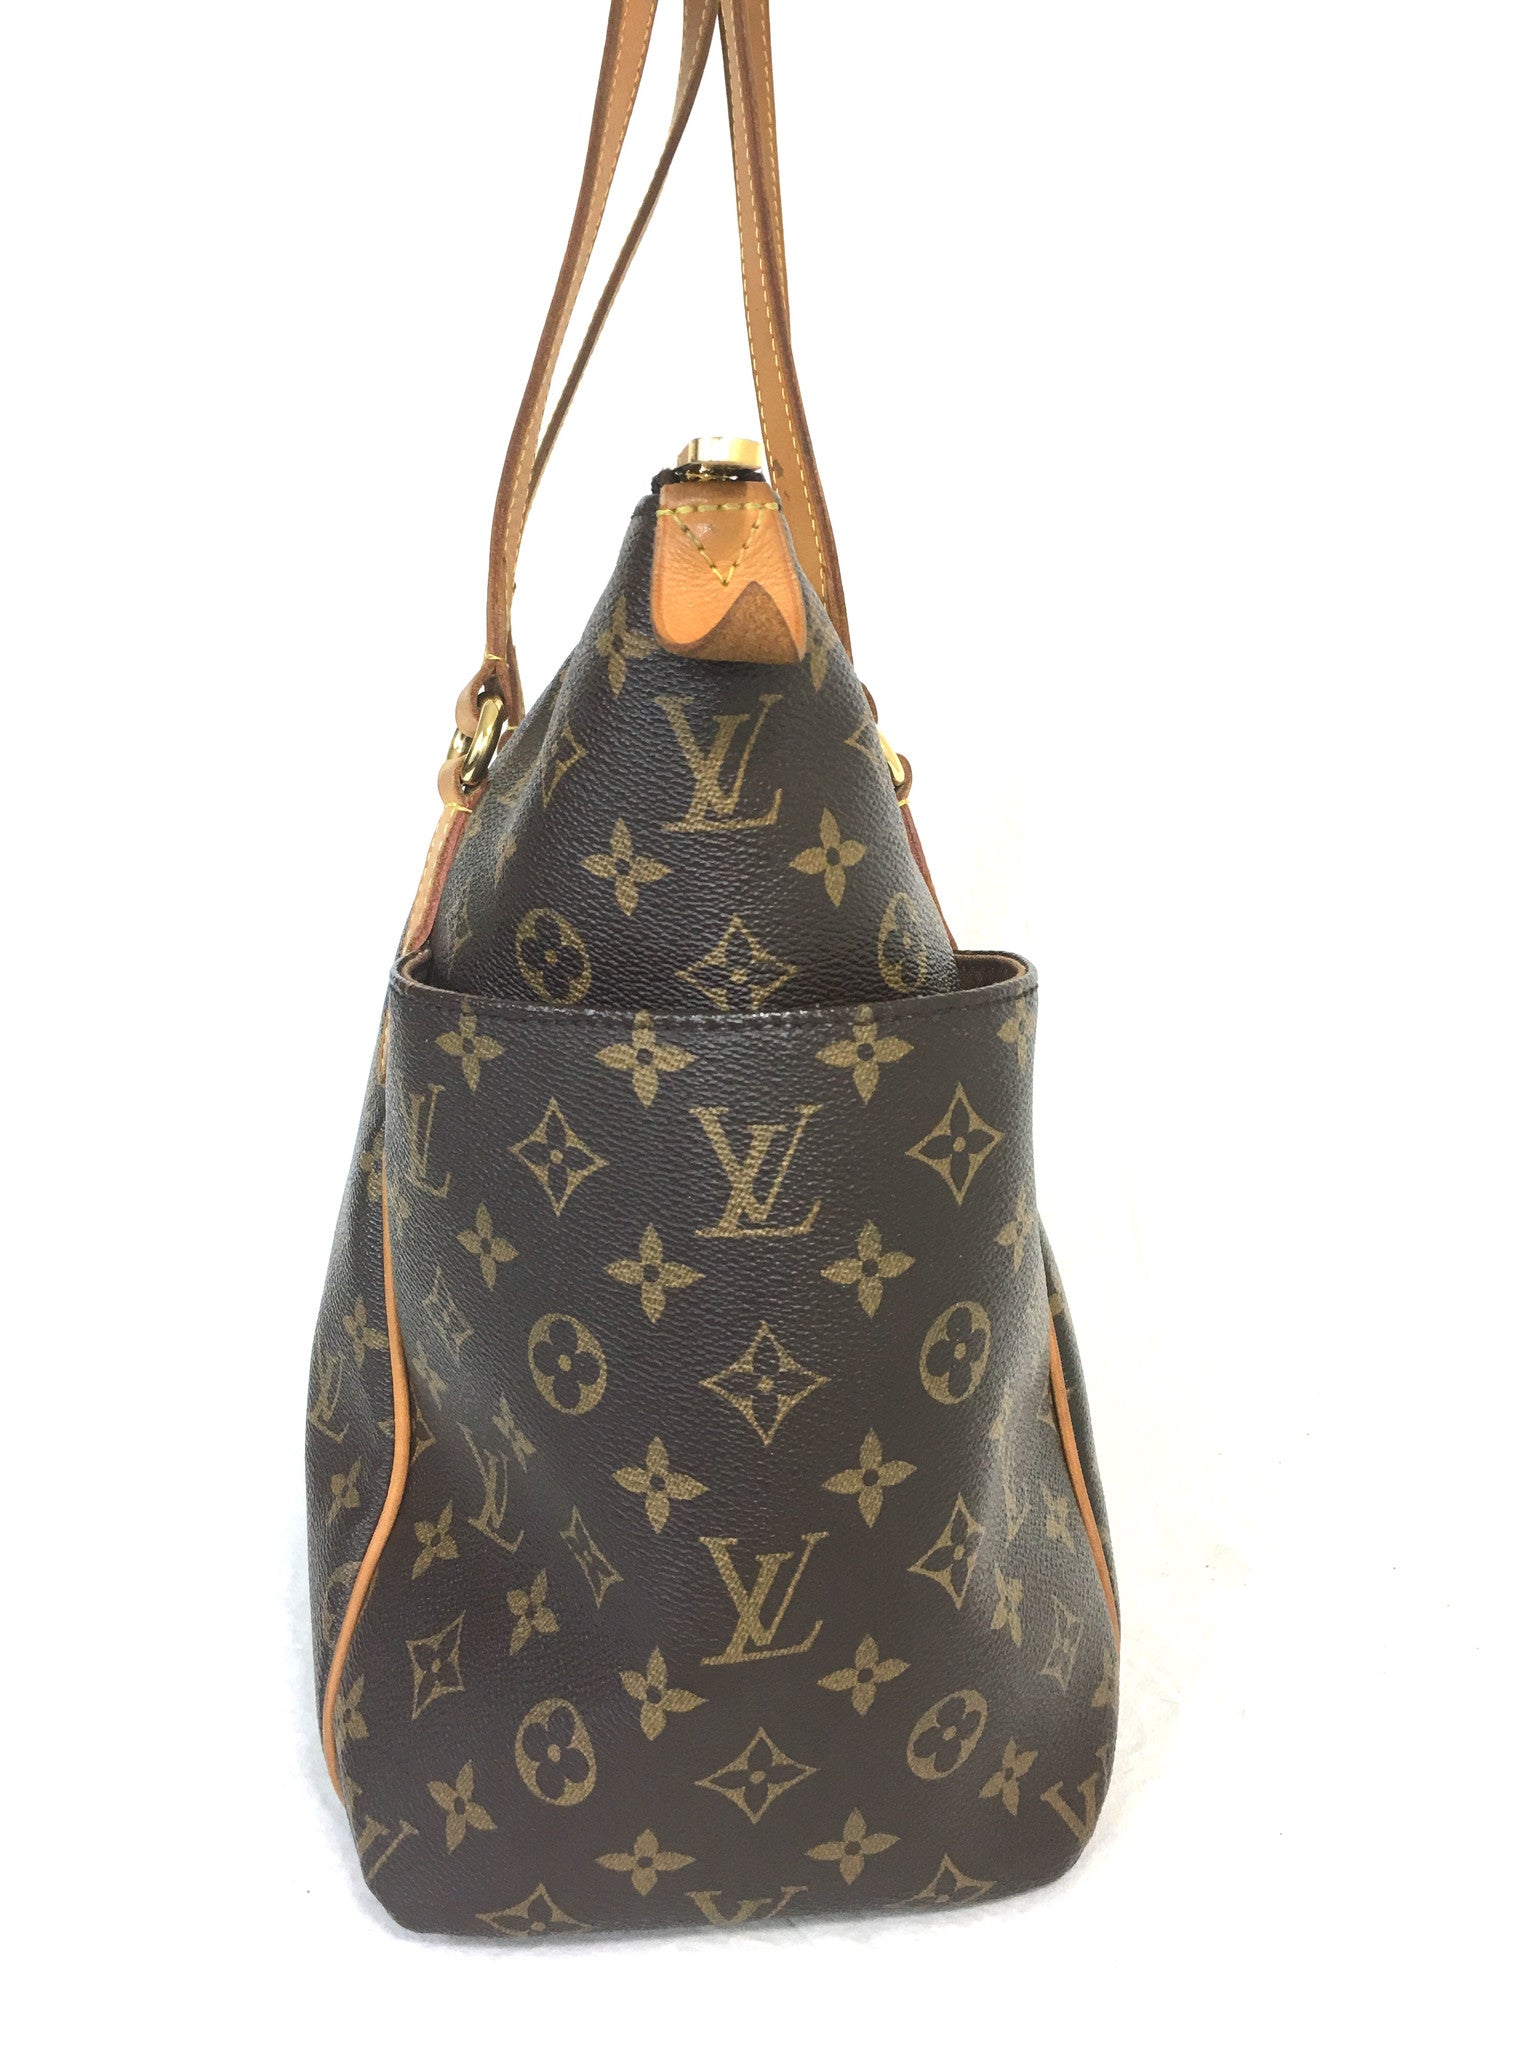 Louis Vuitton 😍 obsessed! #neverfullbb #louisvuittonbag